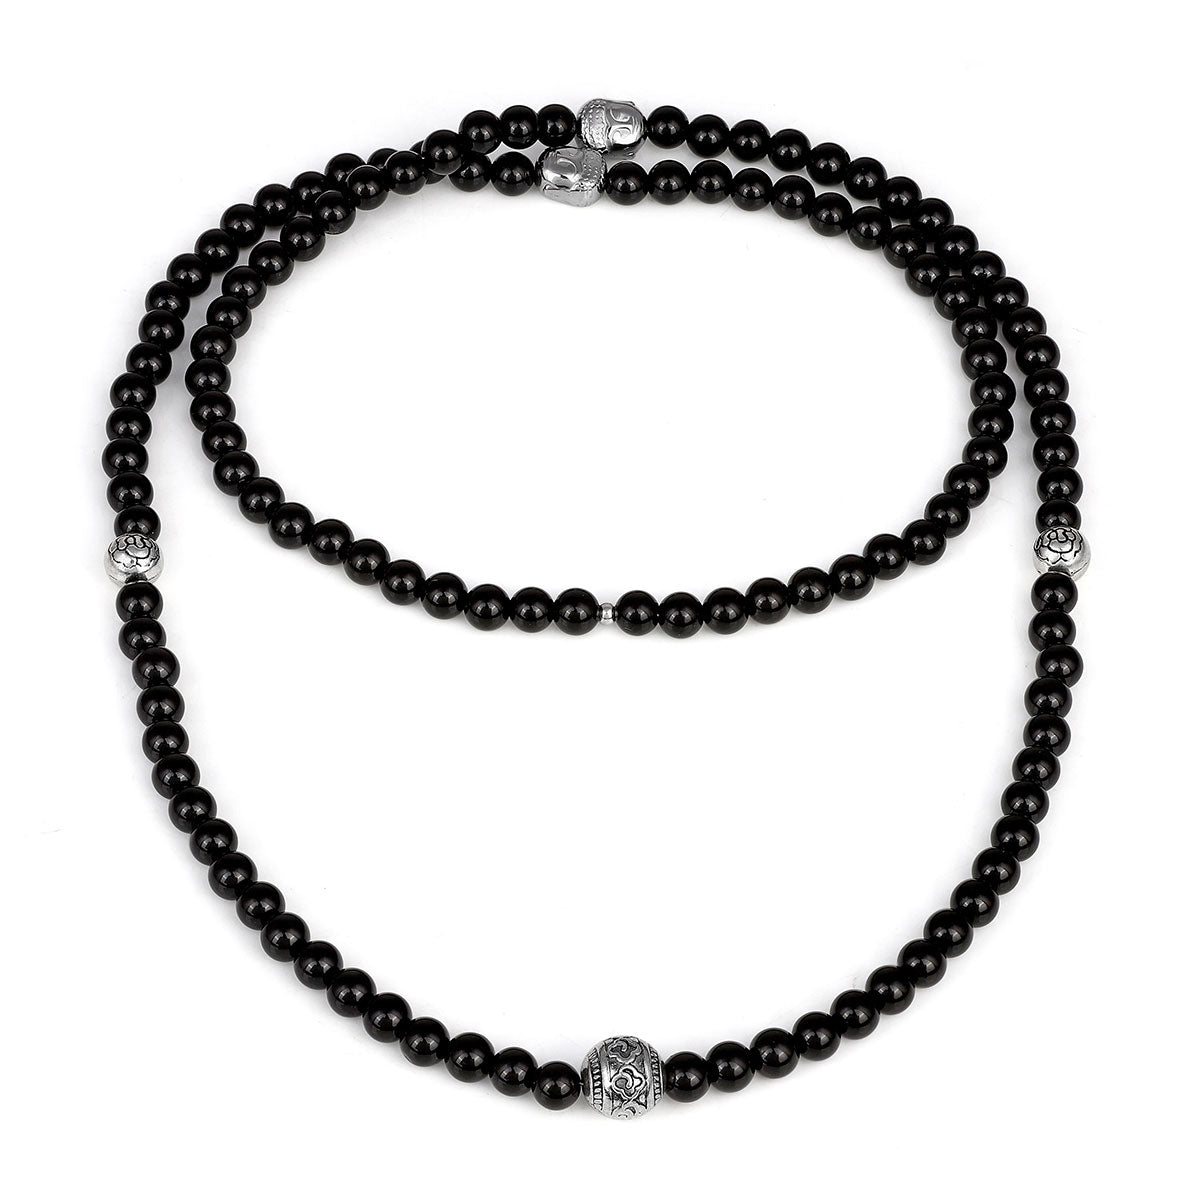 Black Onyx and Hematite Beads Necklace